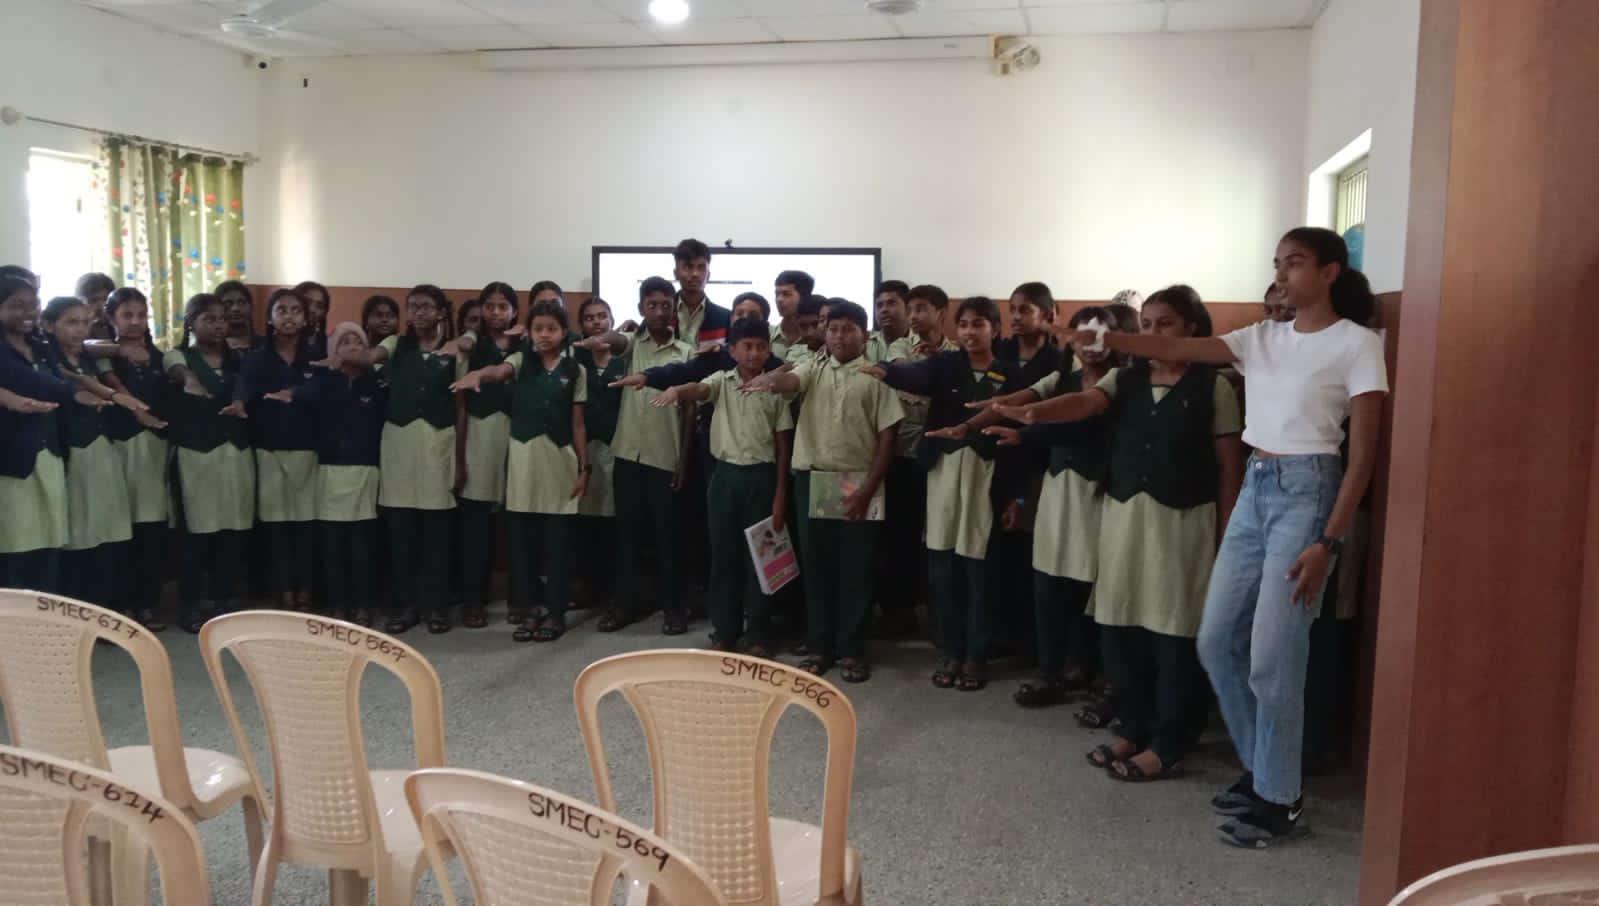 Divaa conducting an awareness session at a school in Karnataka